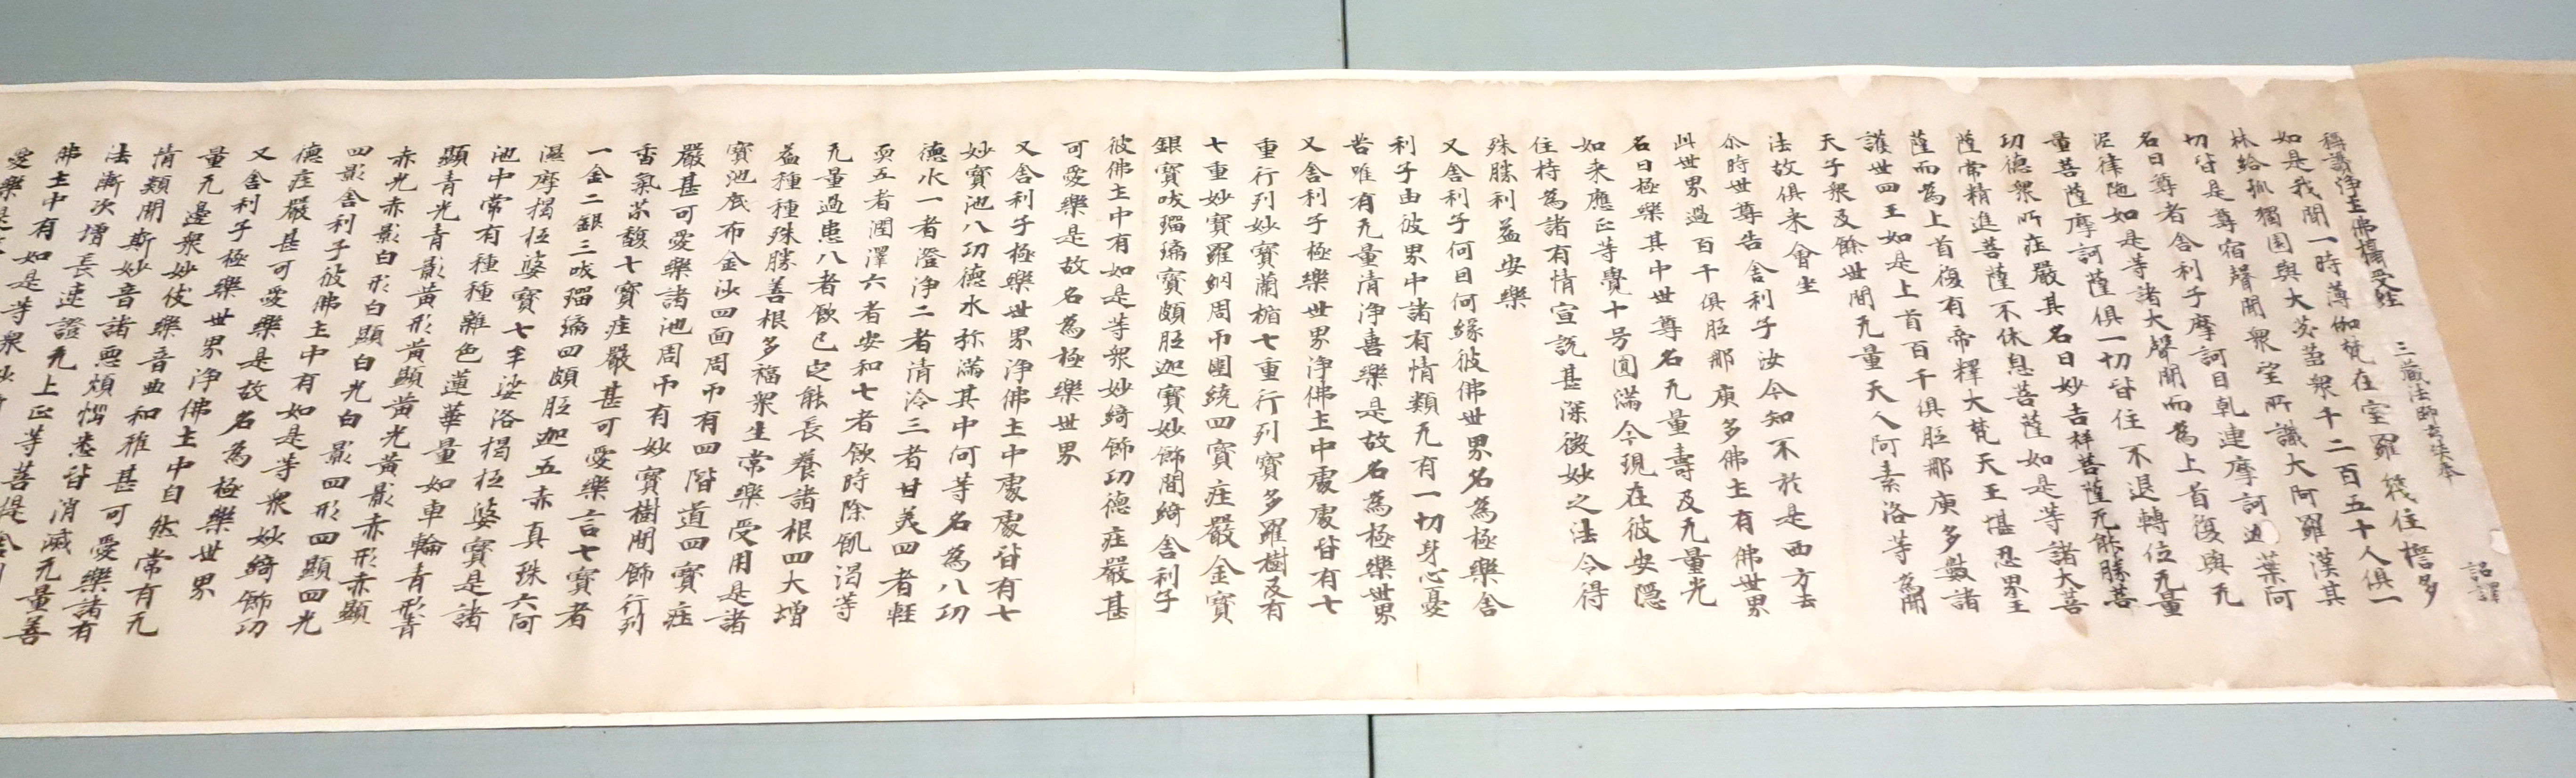 File Shosan Jodo Butsu Shoju Kyo Sutra On Pure Land And Salvation Through The Grace Of Buddha Nara Period 8th Century Ink On Paper View 1 Tokyo National Museum Dsc Jpg